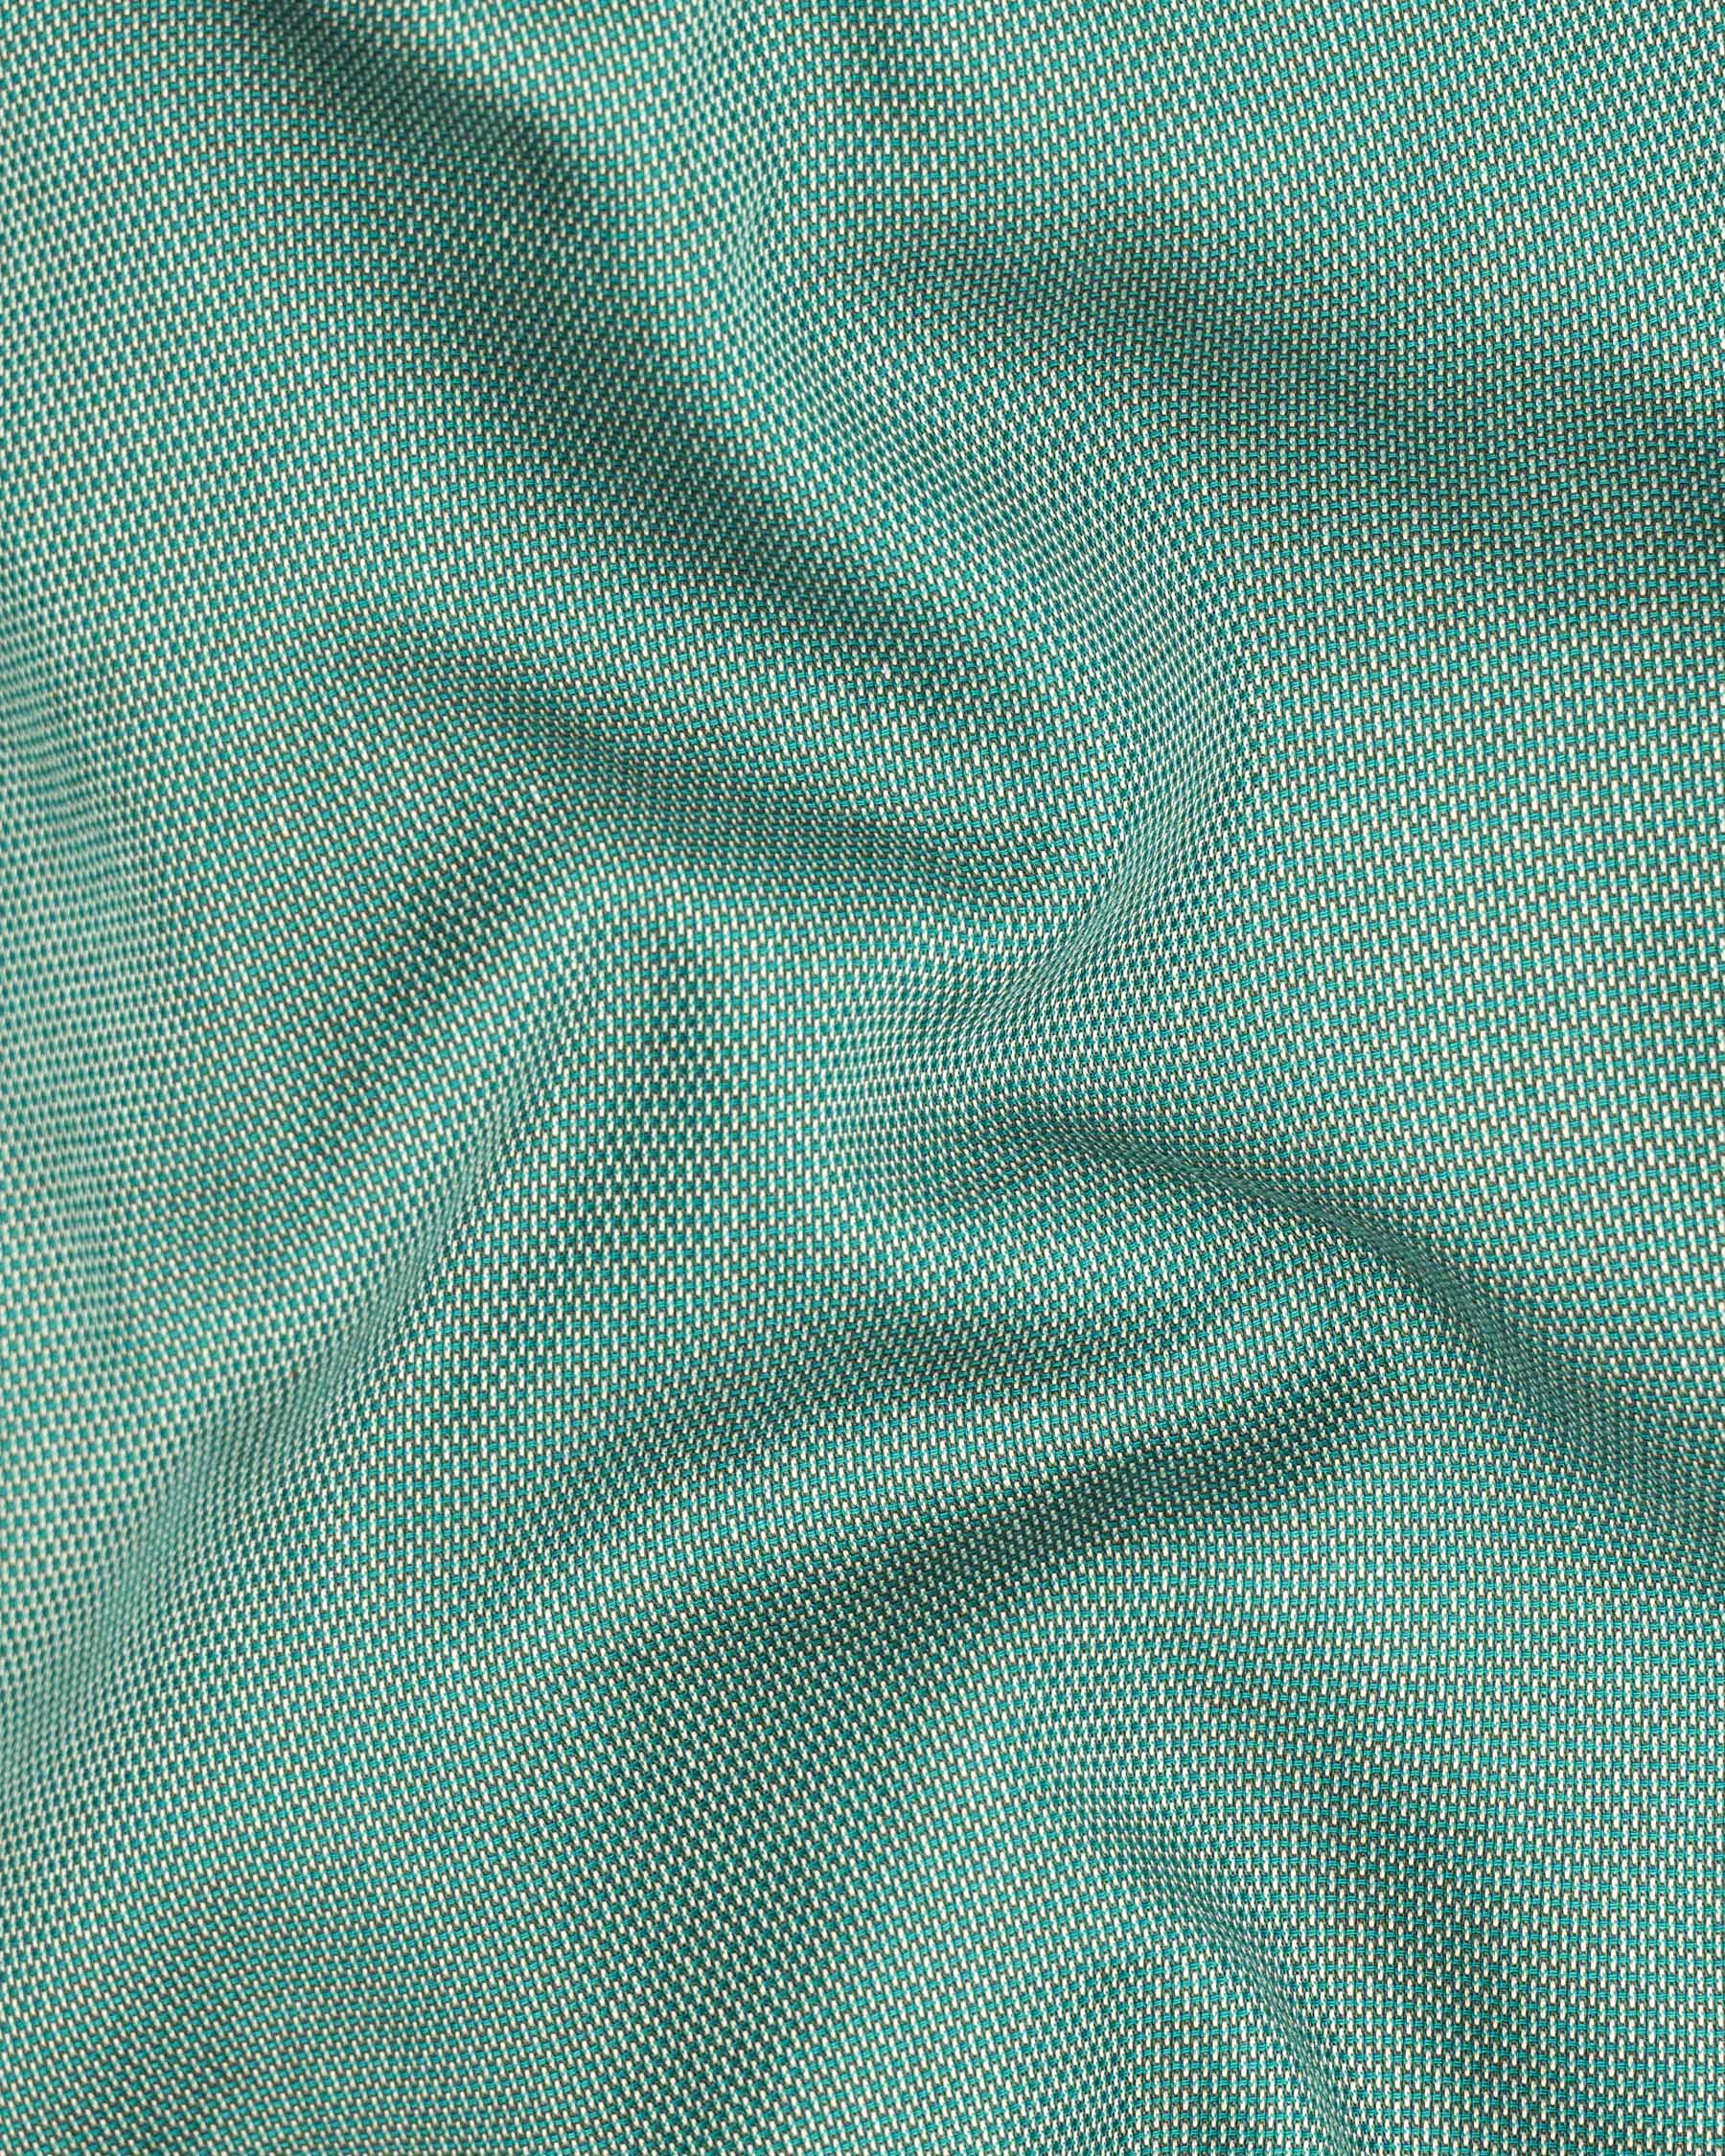 Dark Aqua Green Dobby Textured Premium Giza Cotton Shirt 6490-CA-38, 6490-CA-H-38, 6490-CA-39, 6490-CA-H-39, 6490-CA-40, 6490-CA-H-40, 6490-CA-42, 6490-CA-H-42, 6490-CA-44, 6490-CA-H-44, 6490-CA-46, 6490-CA-H-46, 6490-CA-48, 6490-CA-H-48, 6490-CA-50, 6490-CA-H-50, 6490-CA-52, 6490-CA-H-52